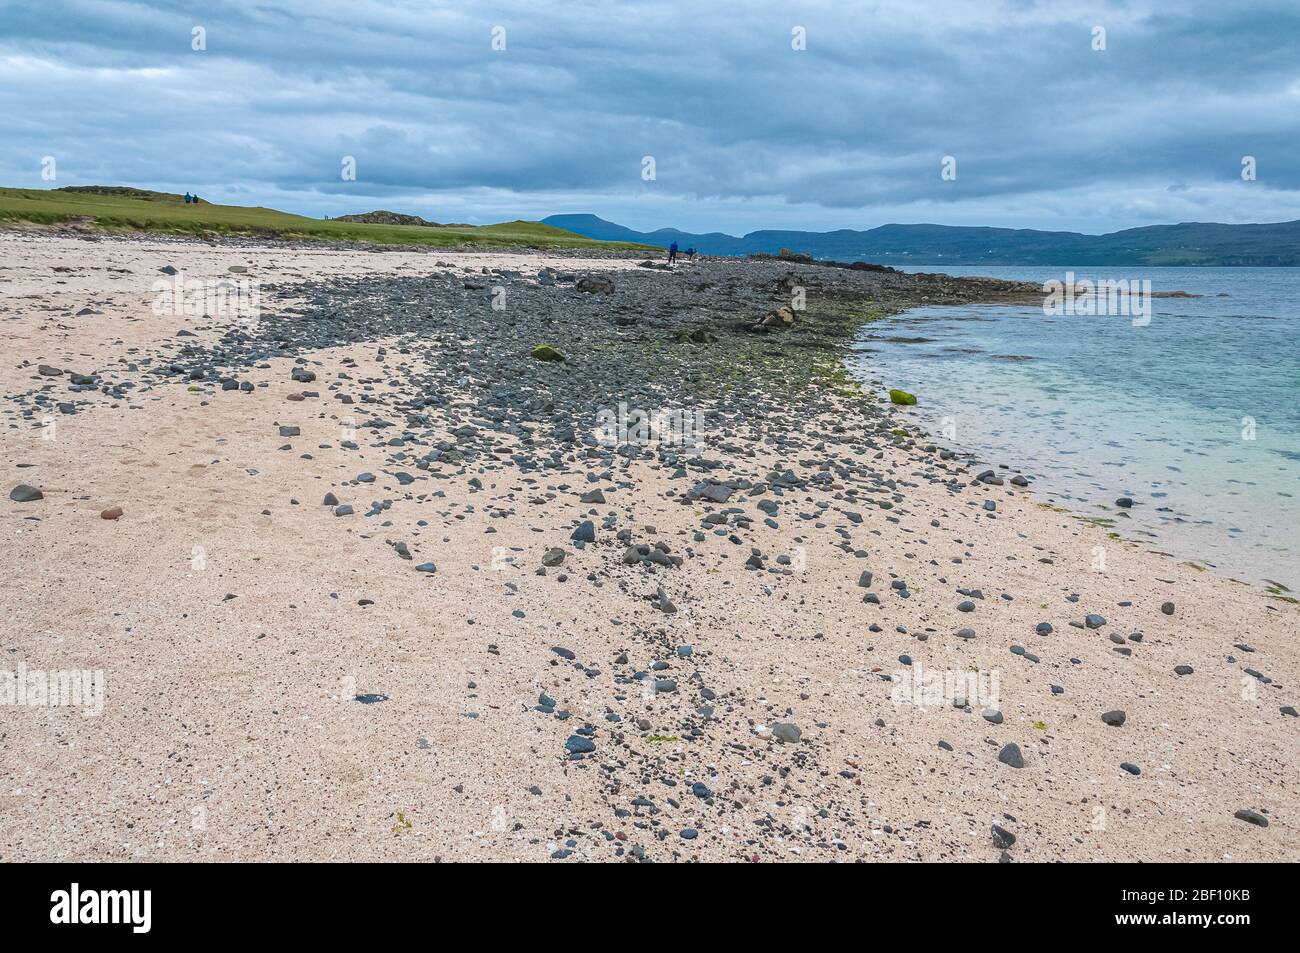 White beach with black stones, Coral Beach, Isle of Skye, Scotland Stock Photo